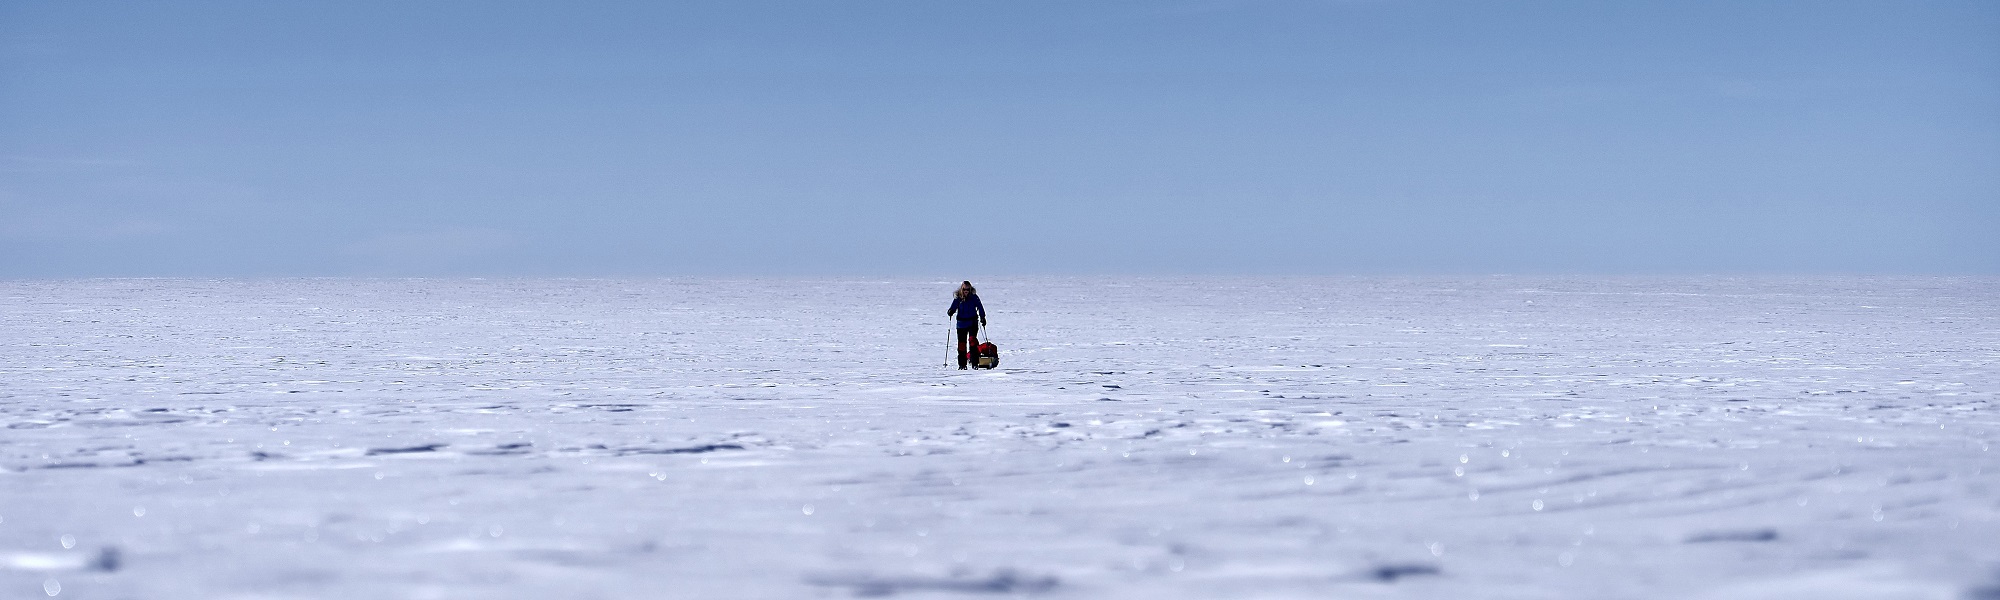 Meet the Women Who Conquered Antarctica